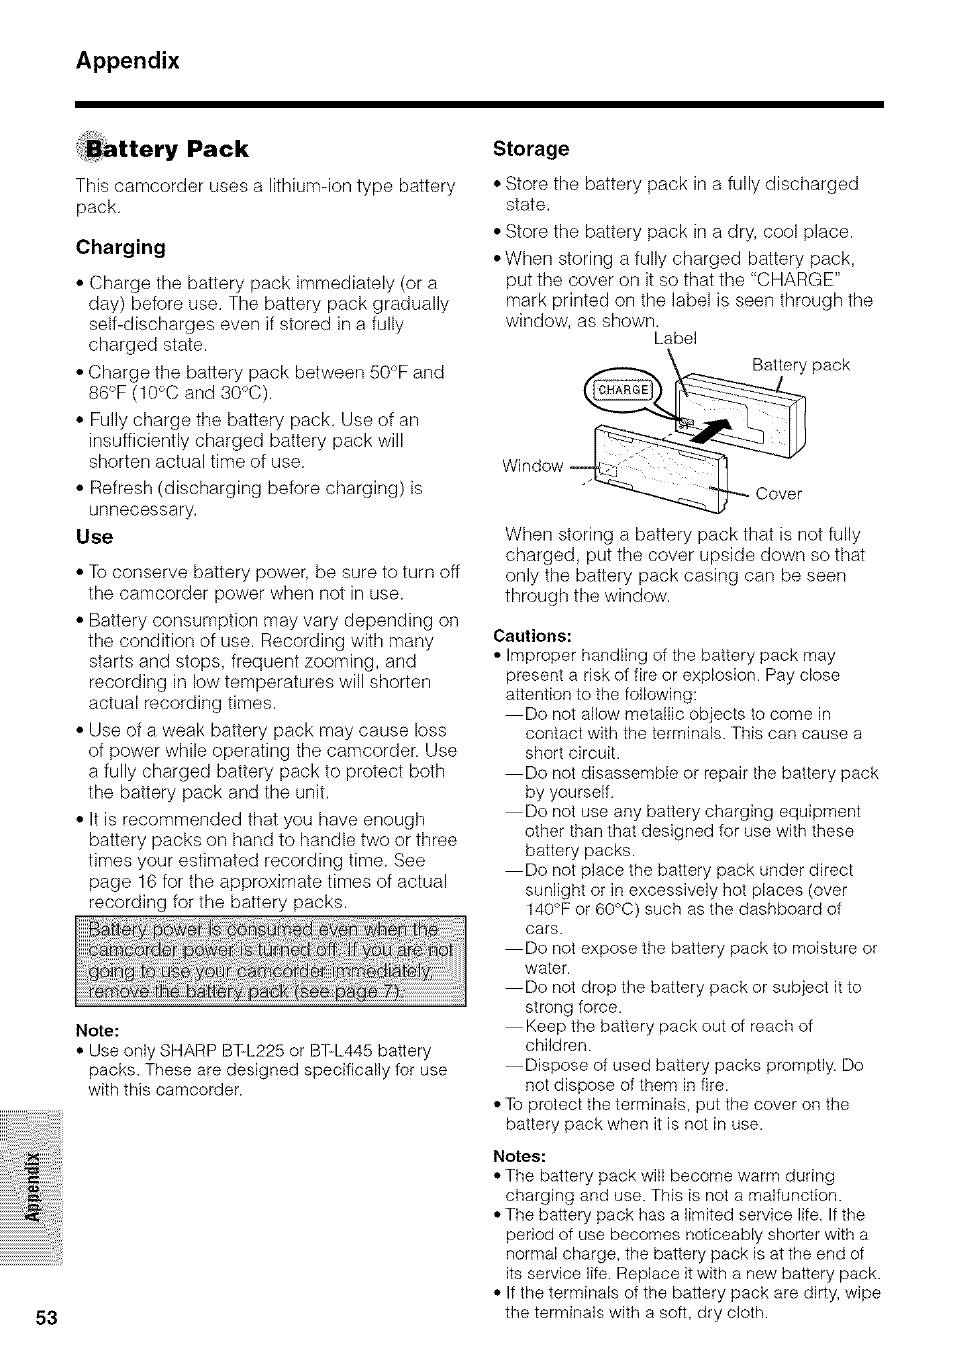 Battery pack, Charging, Storage | Appendix | Sharp VIEWCAM VL-NZ50U User Manual | Page 66 / 83